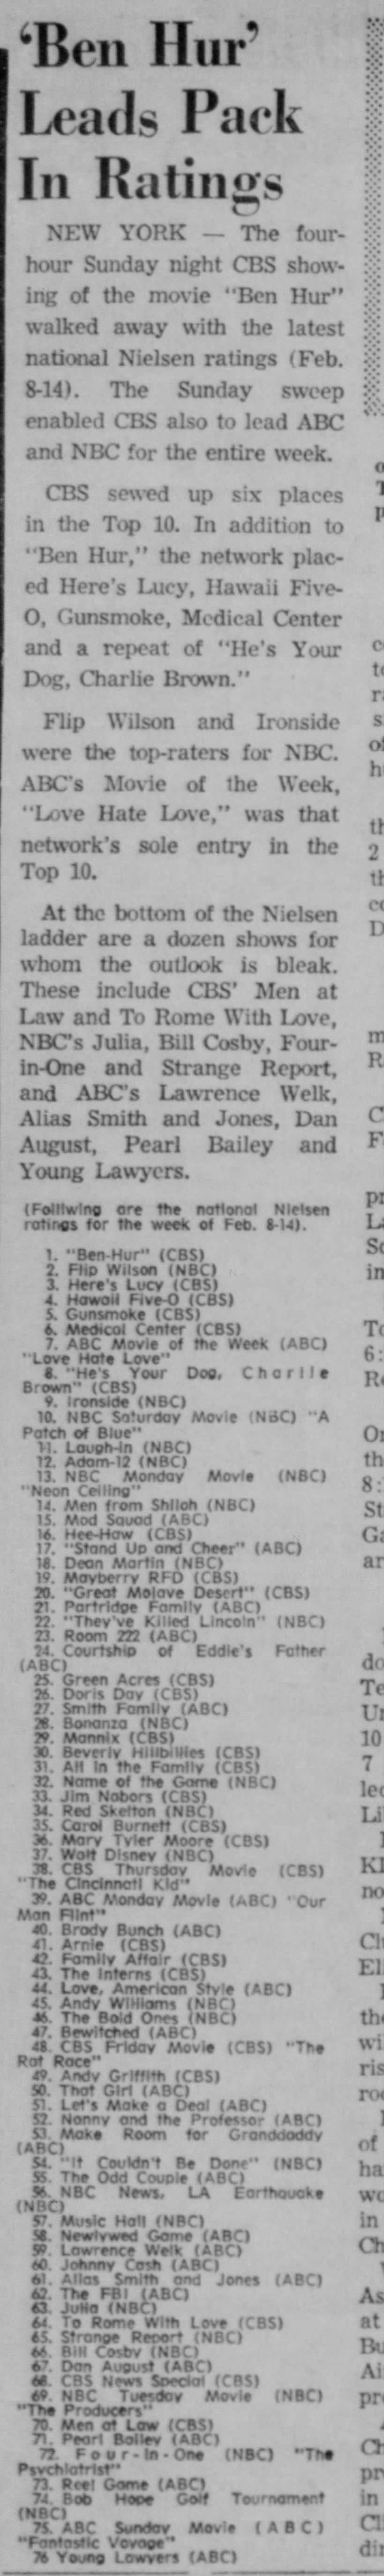 Nielsen ratings February 8-14, 1971 Top 76